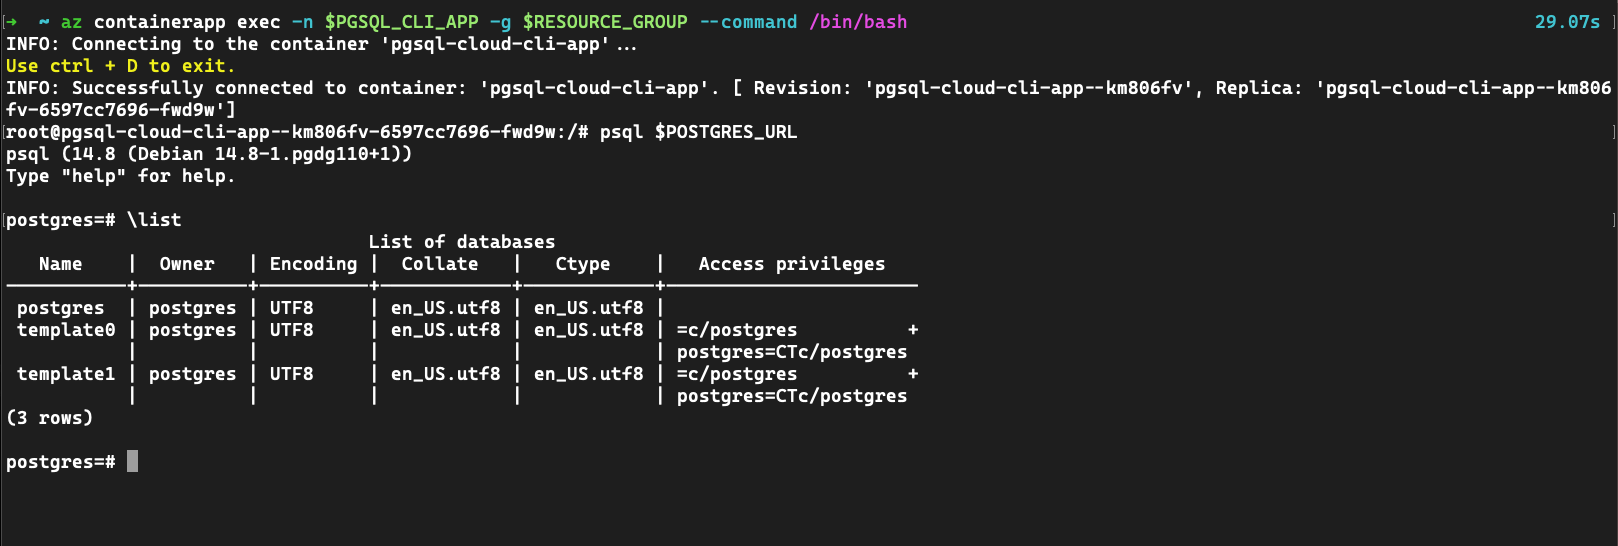 Captura de pantalla de la aplicación contenedora que utiliza pgsql para conectarse a un servicio PostgreSQL.